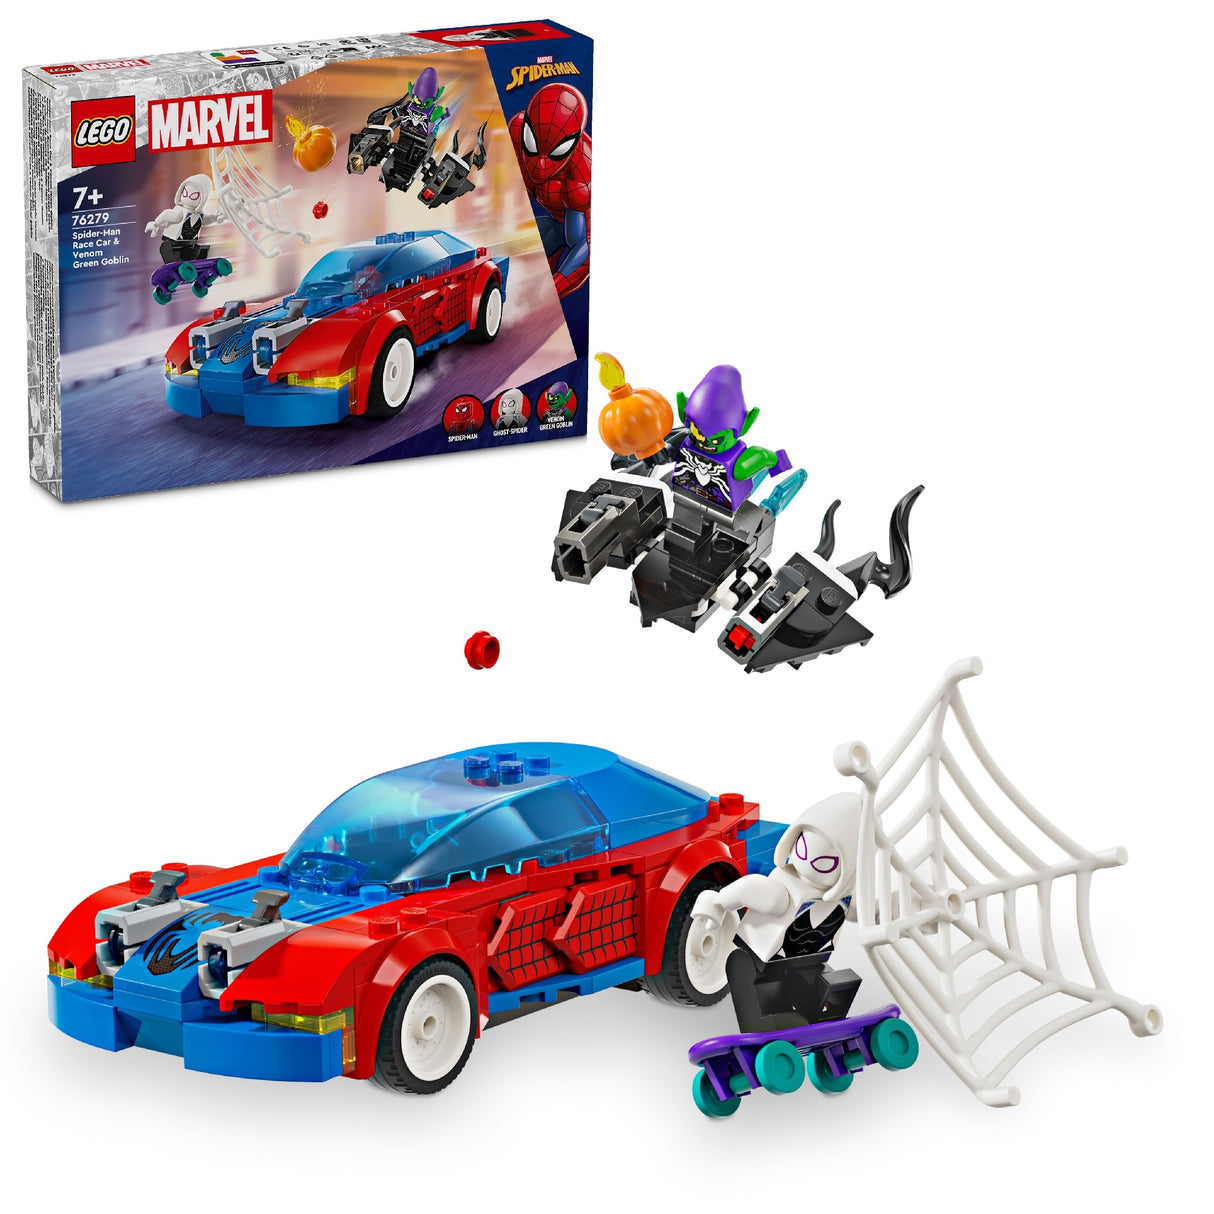 LEGO MARVEL SPIDER-MAN RACE CAR & VENOM GREEN GOBLIN 76279 AGE: 7+